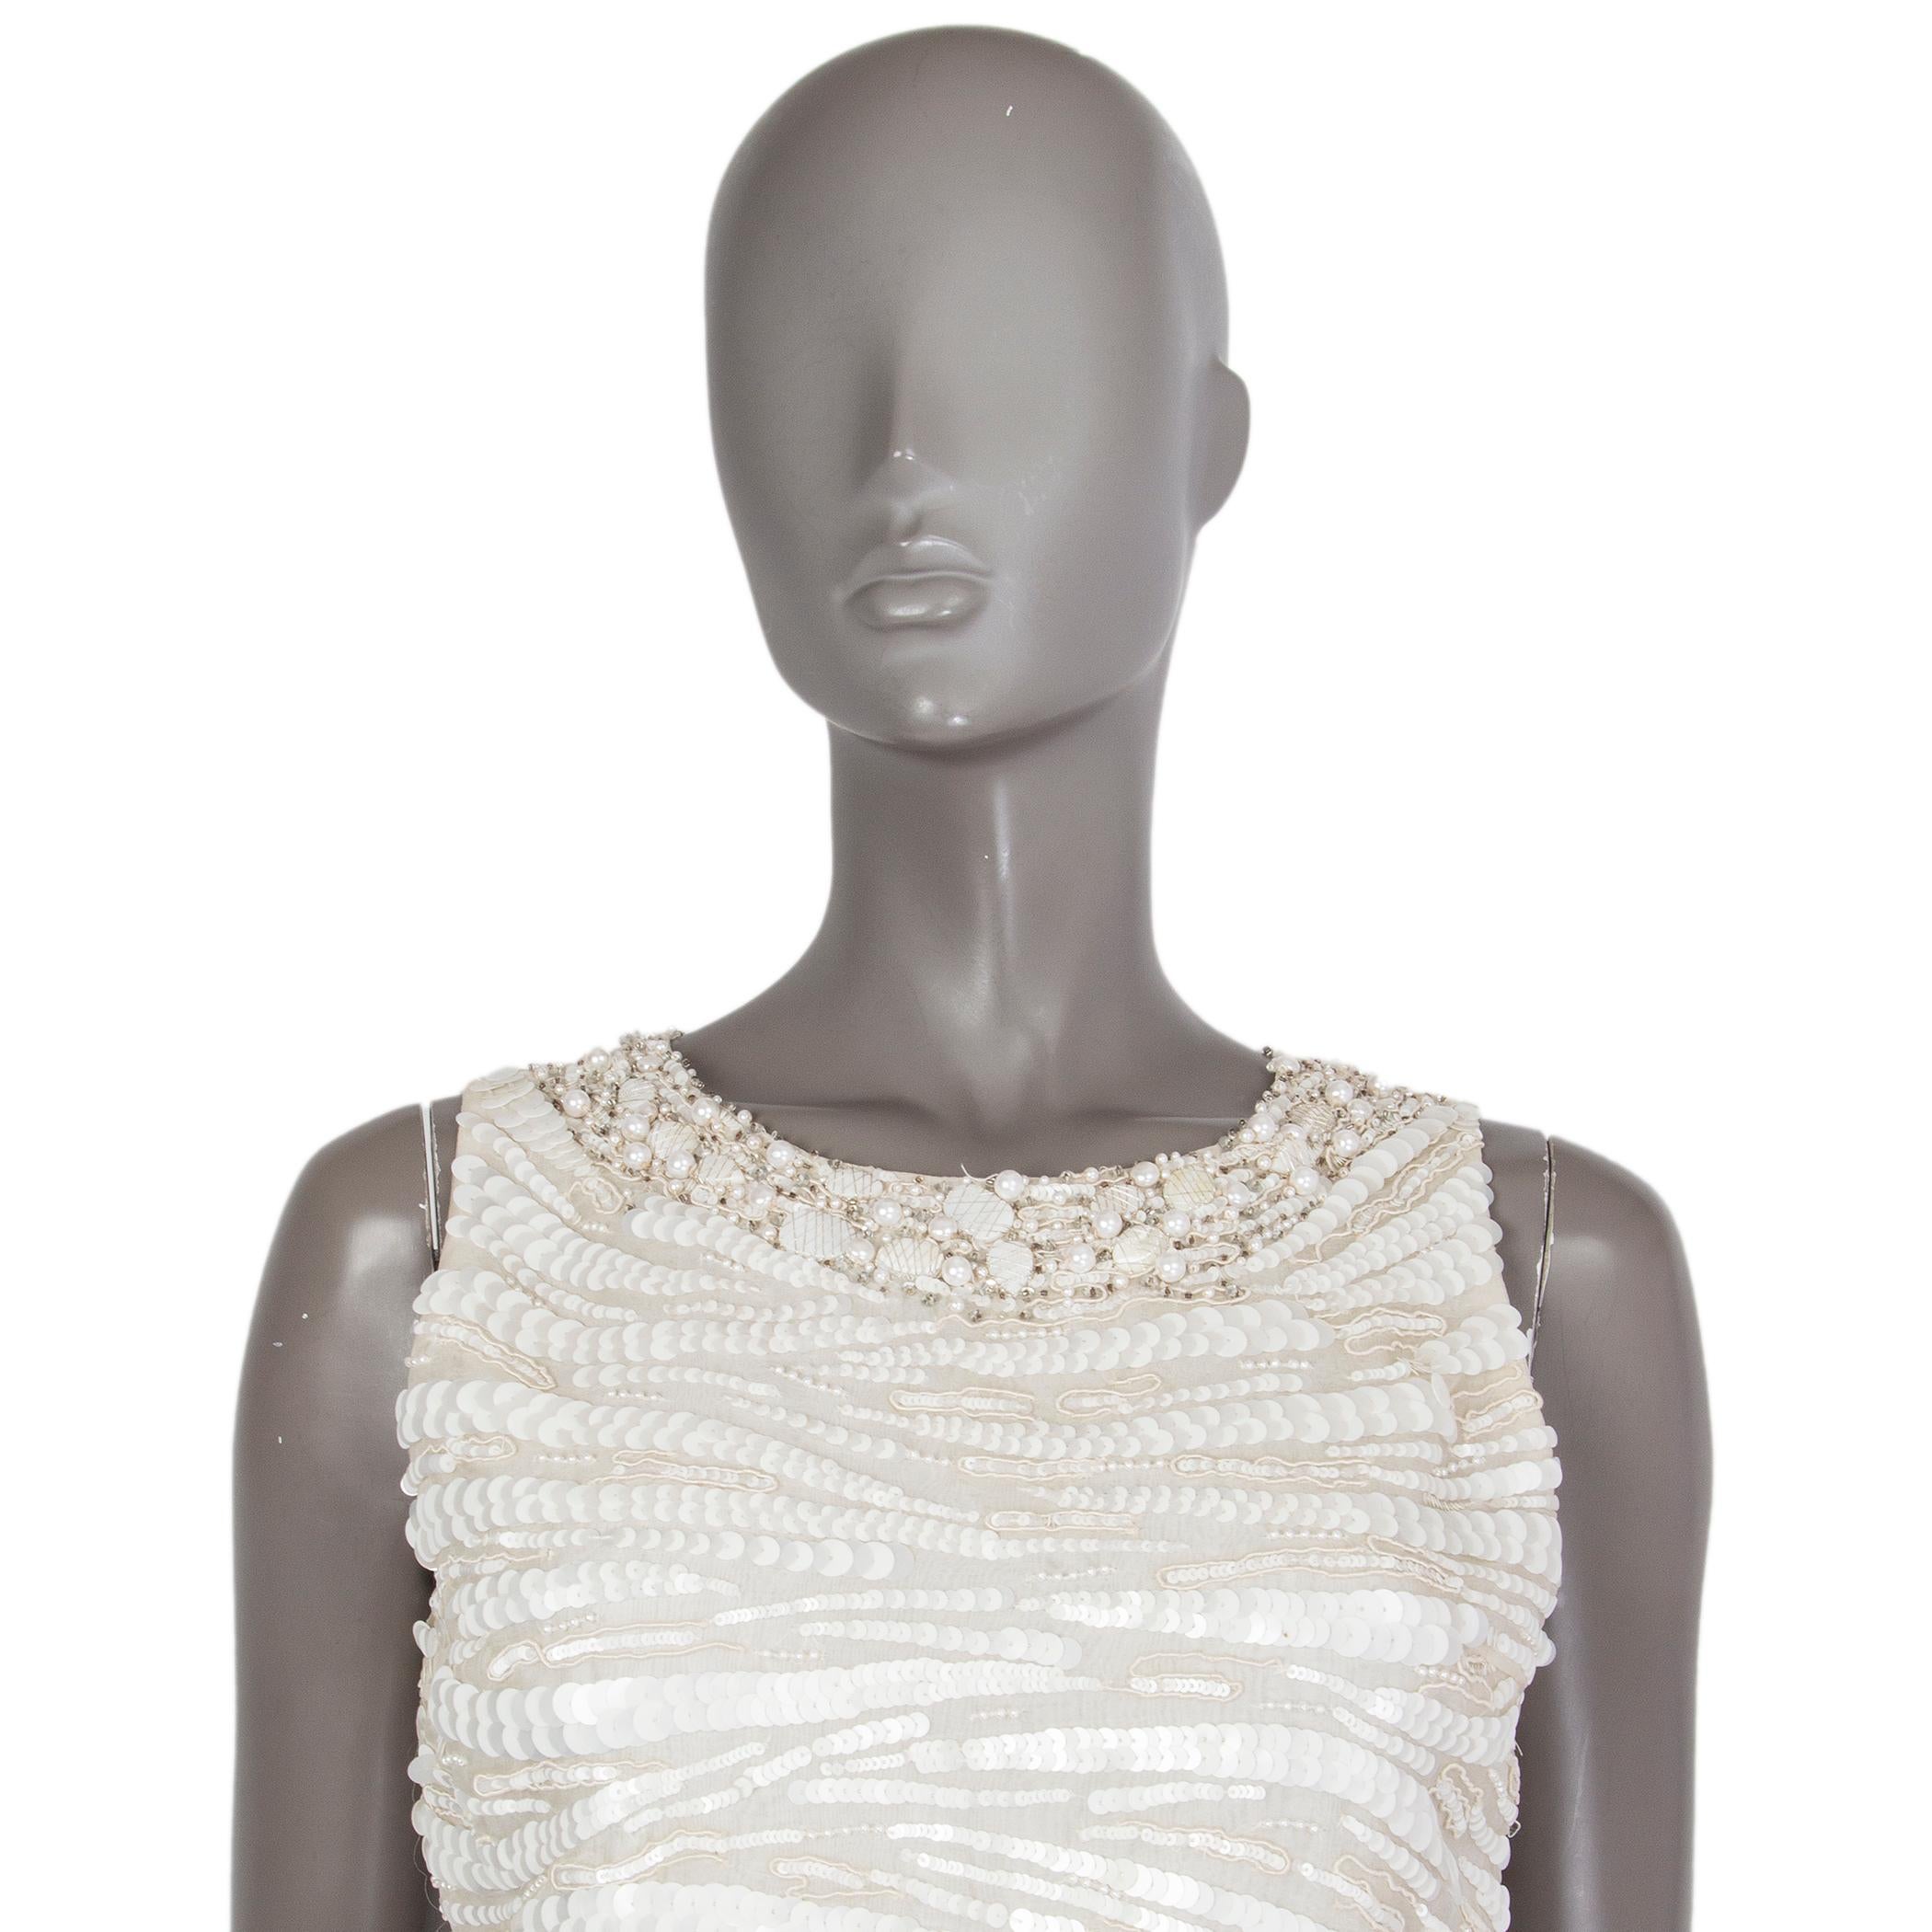 OSCAR DE LA RENTA champaign & white SEQUIN Sheath Dress 4 XS In Excellent Condition For Sale In Zürich, CH